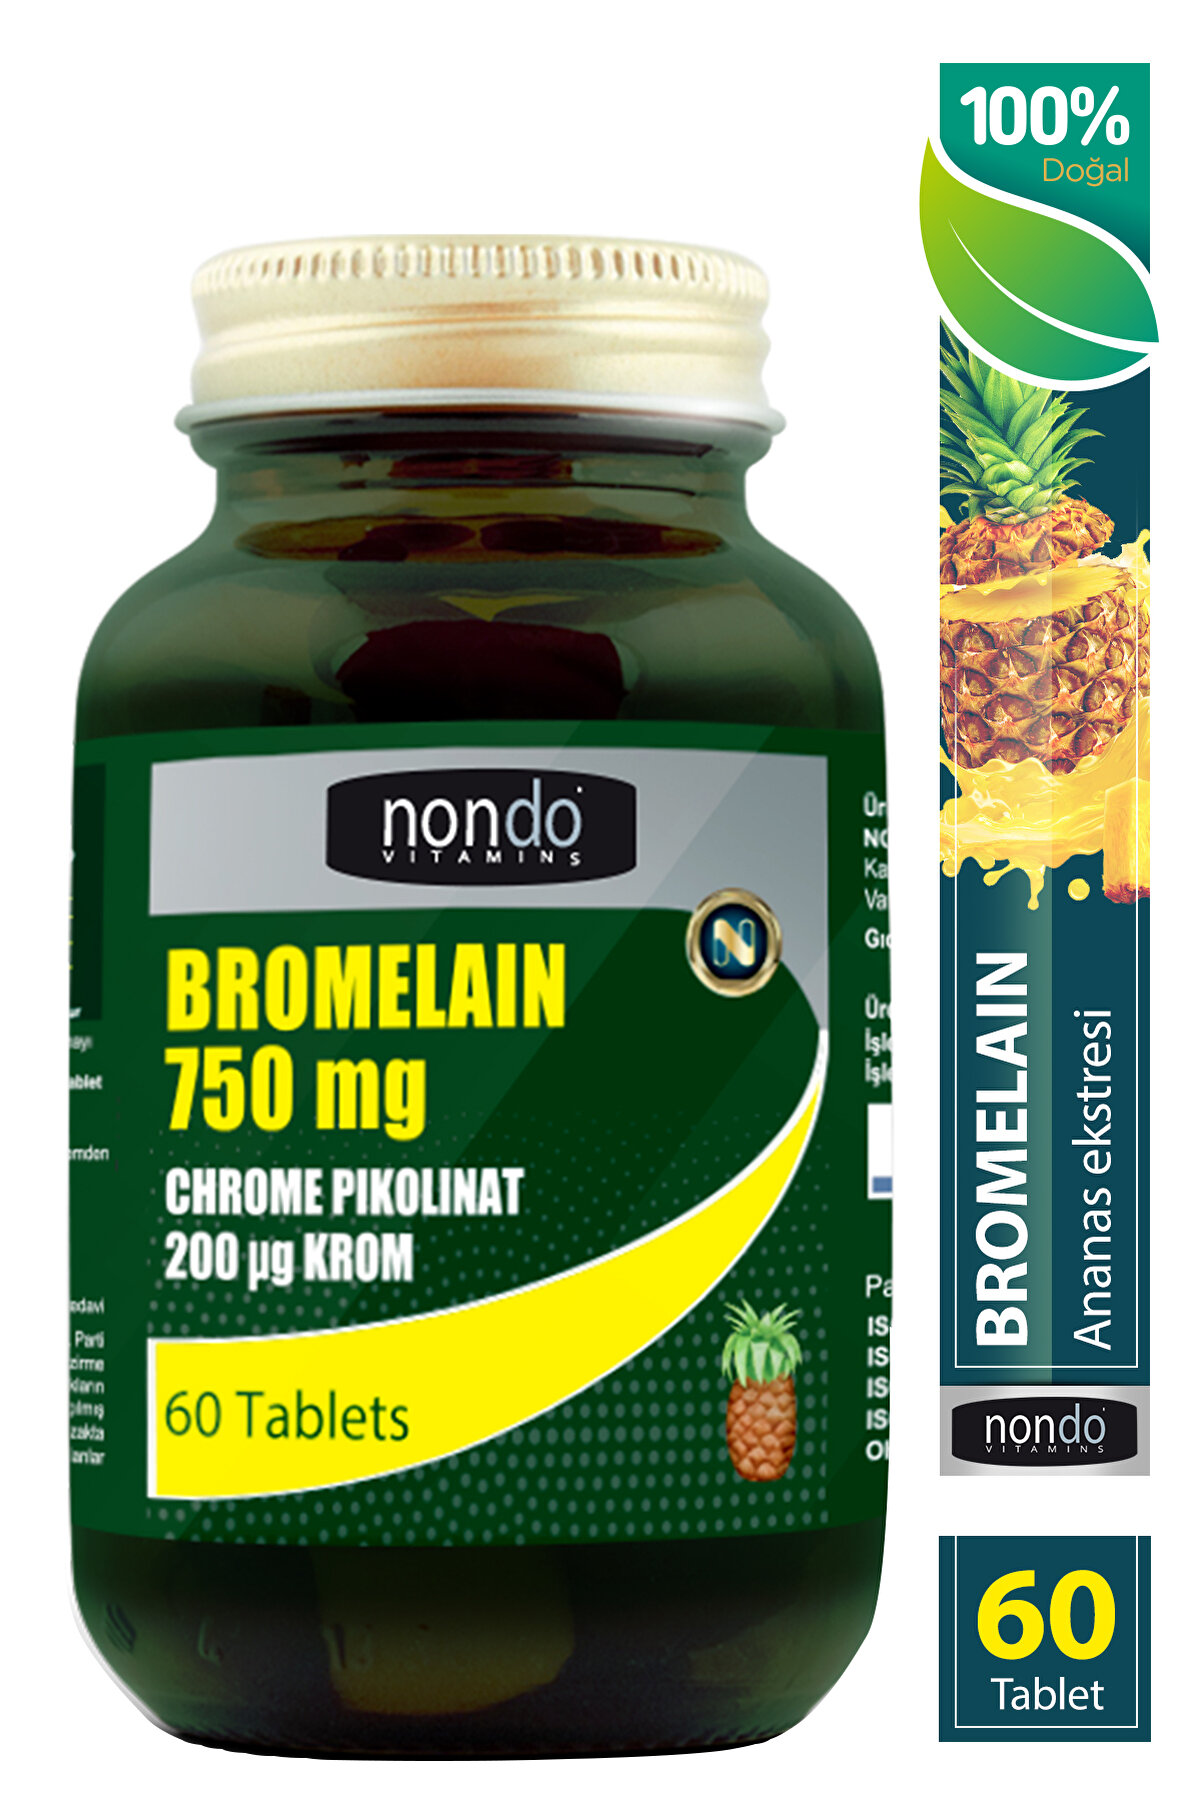 Nondo Bromelain 750mg Krom Pikolinat 60 Tablet Bromelian Ananas Özü Krom C Vitamini B12 Vitamini